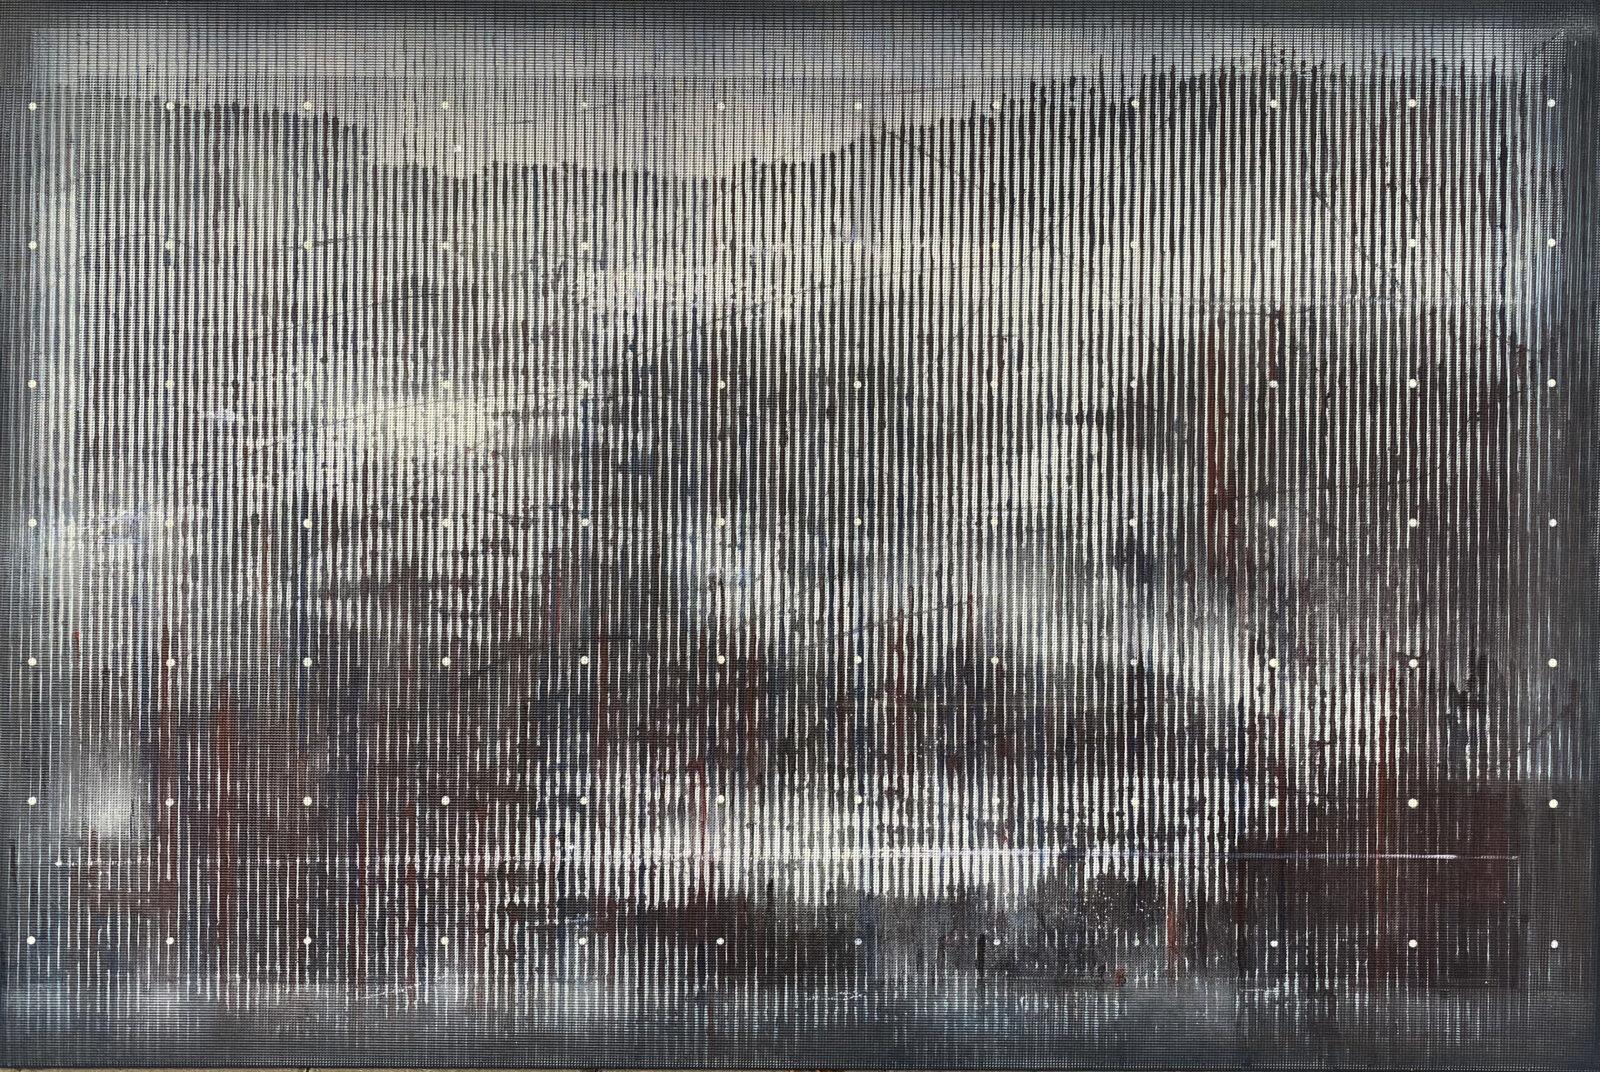 Patrick Ceyssens, The place of meaning is nervous #5, olie op doek, mesh canvas, spraypaint, 120 x 80 cm